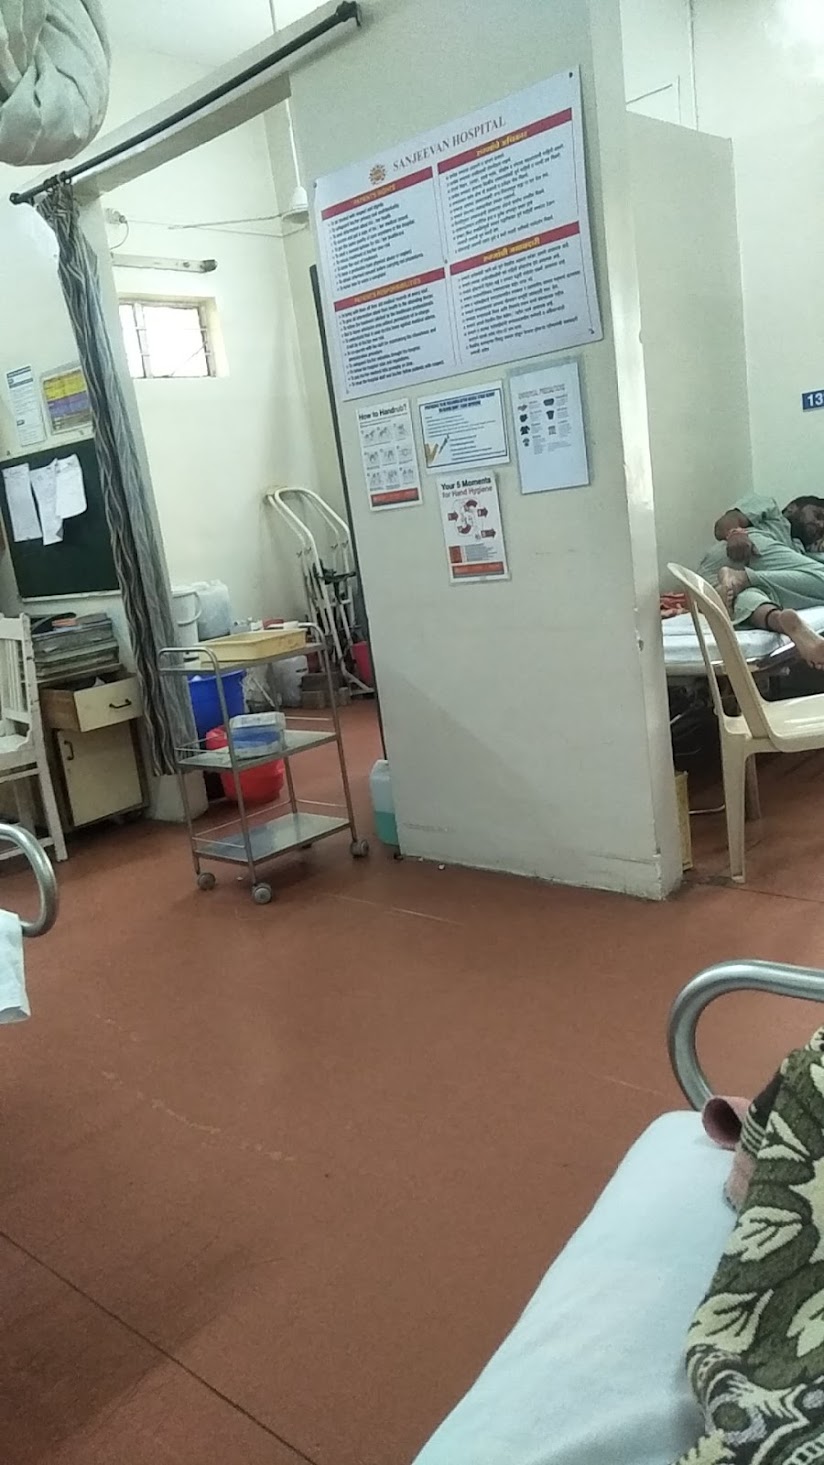 Sanjeevan Hospital-photo